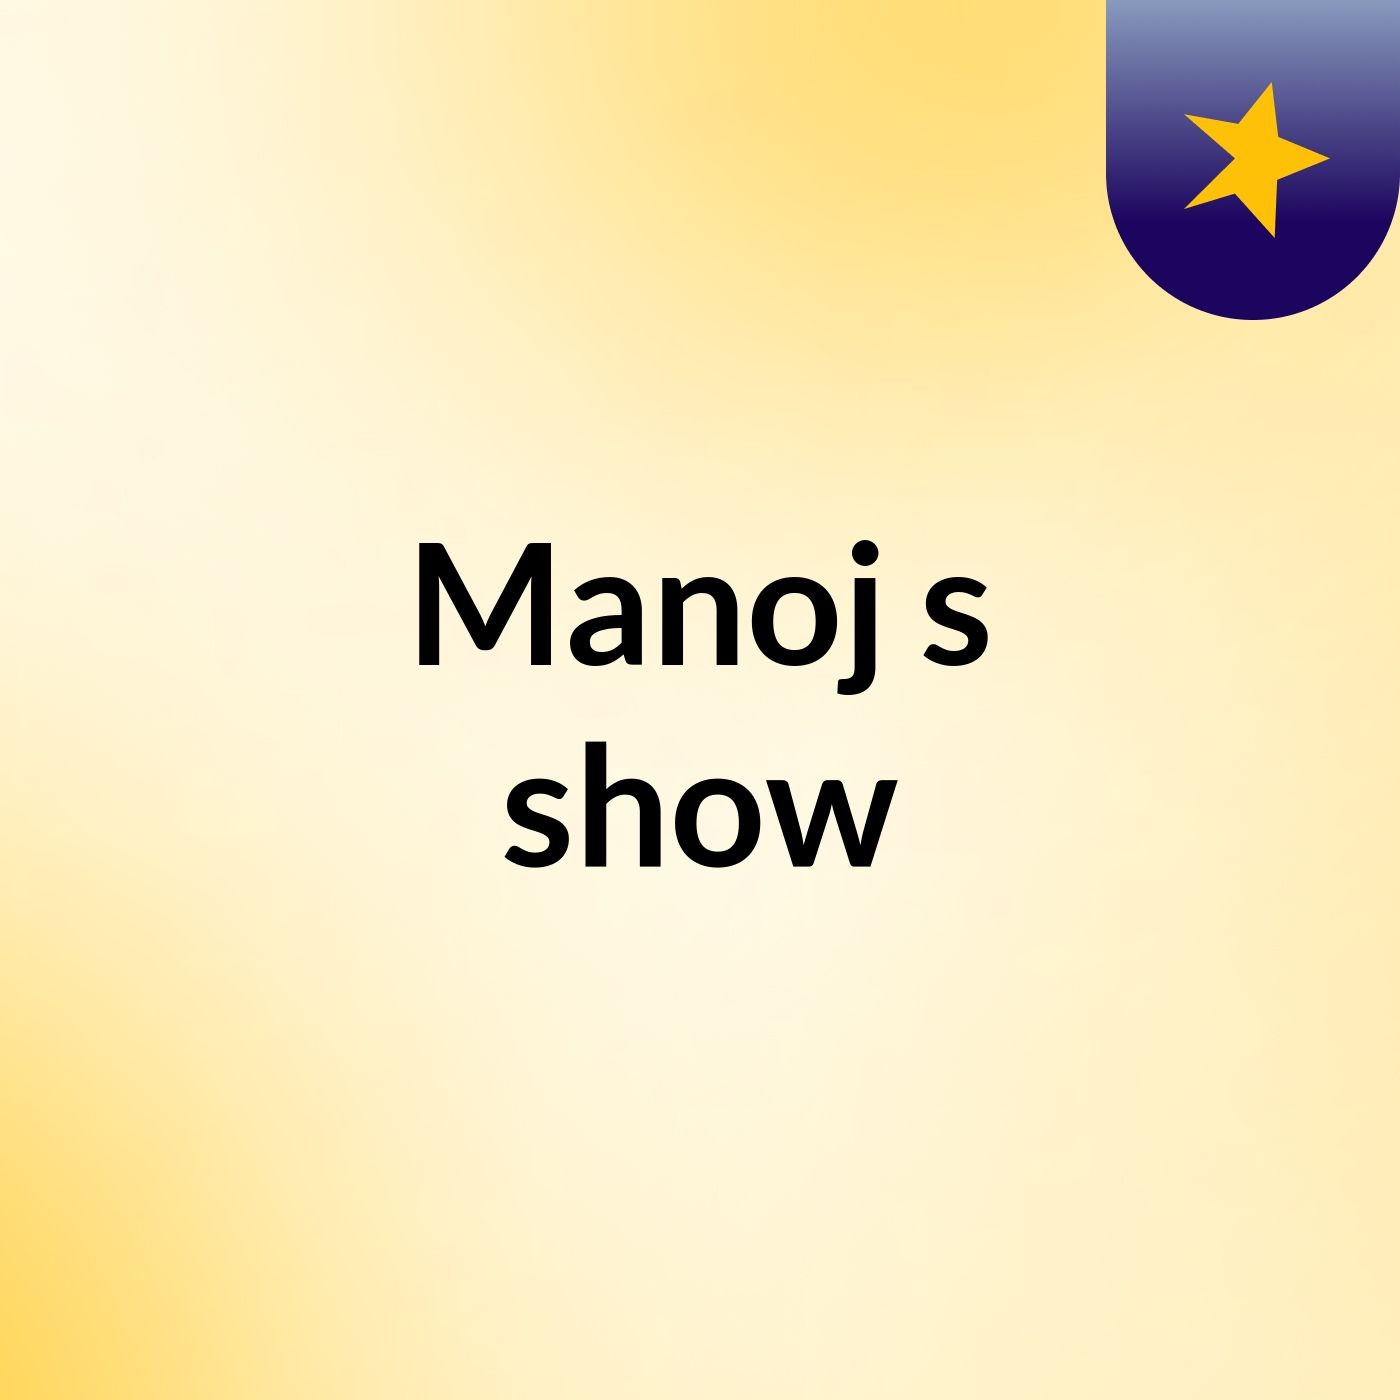 Manoj's show